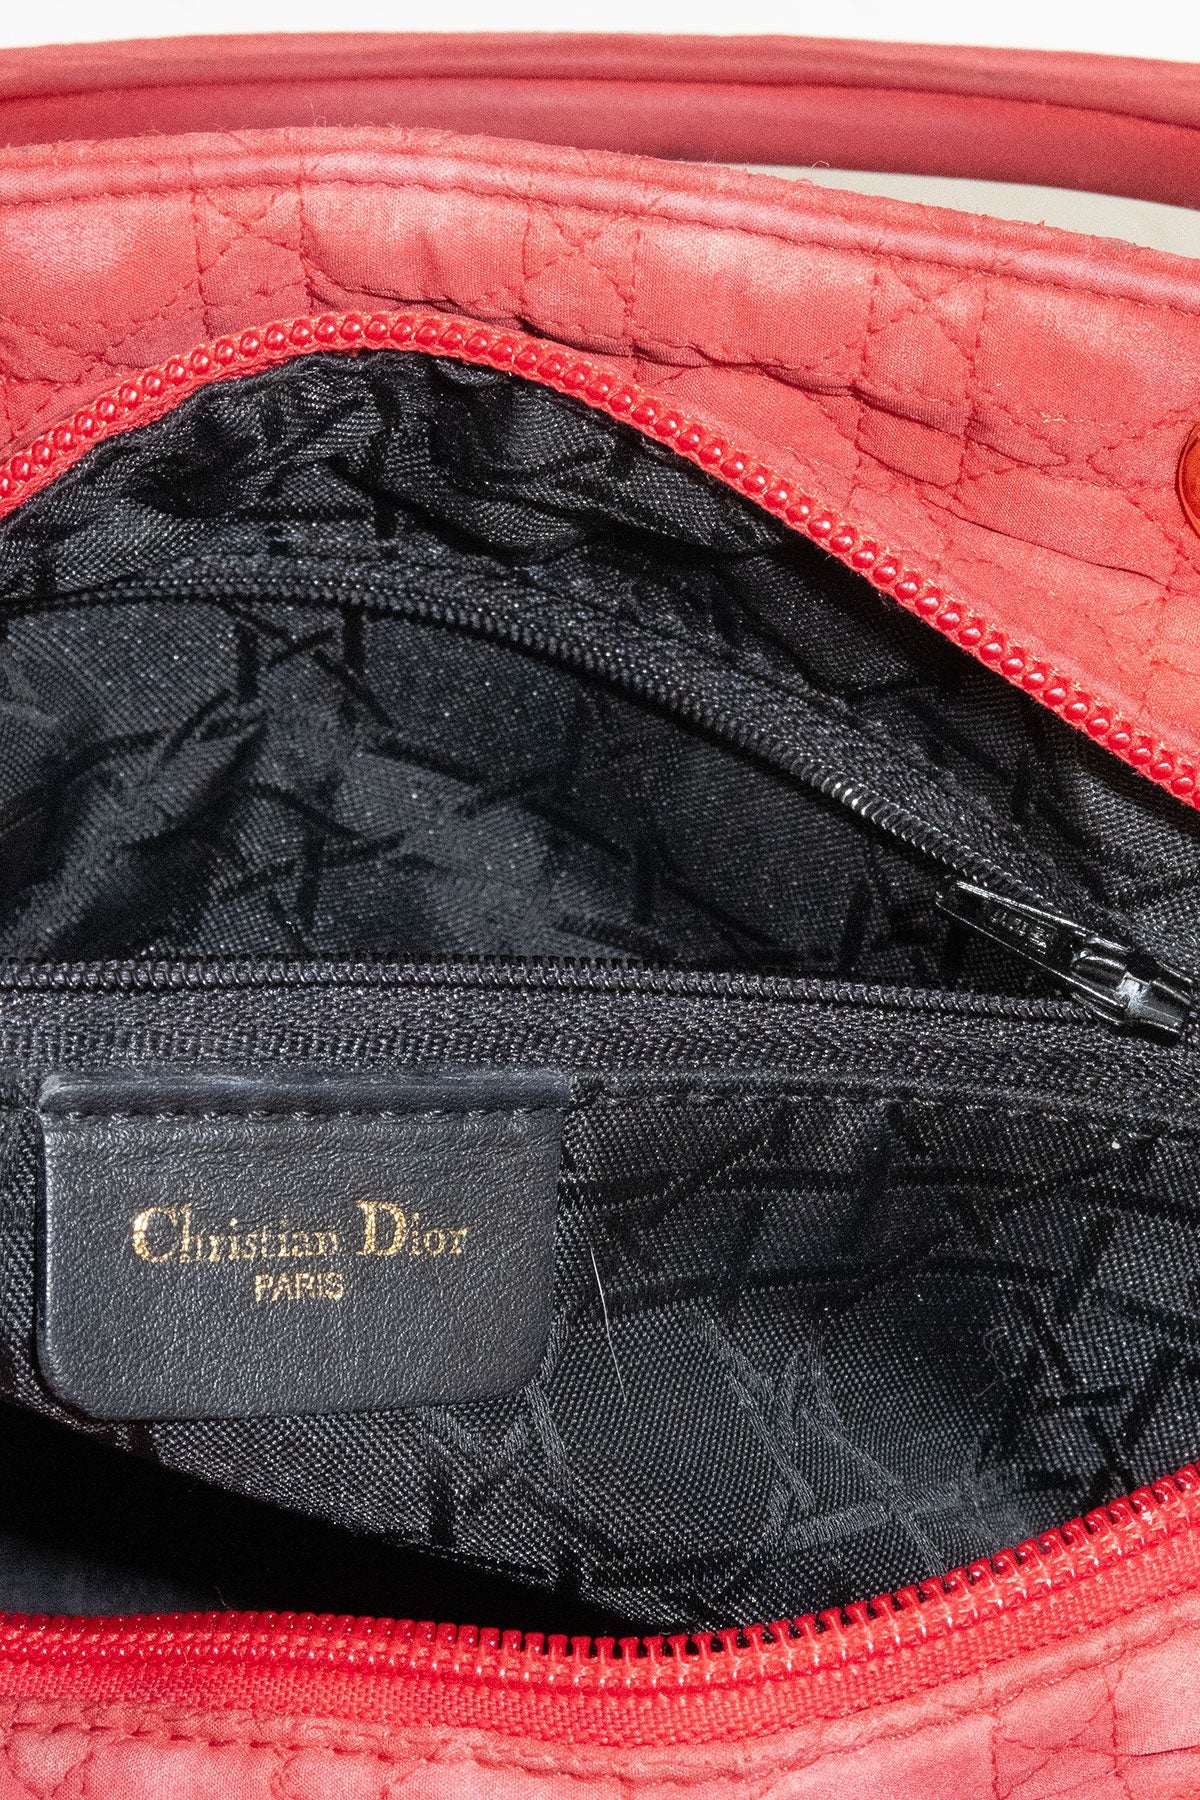 Christian Dior Medium Red Canvas Lady Handbag - Jade Vintage